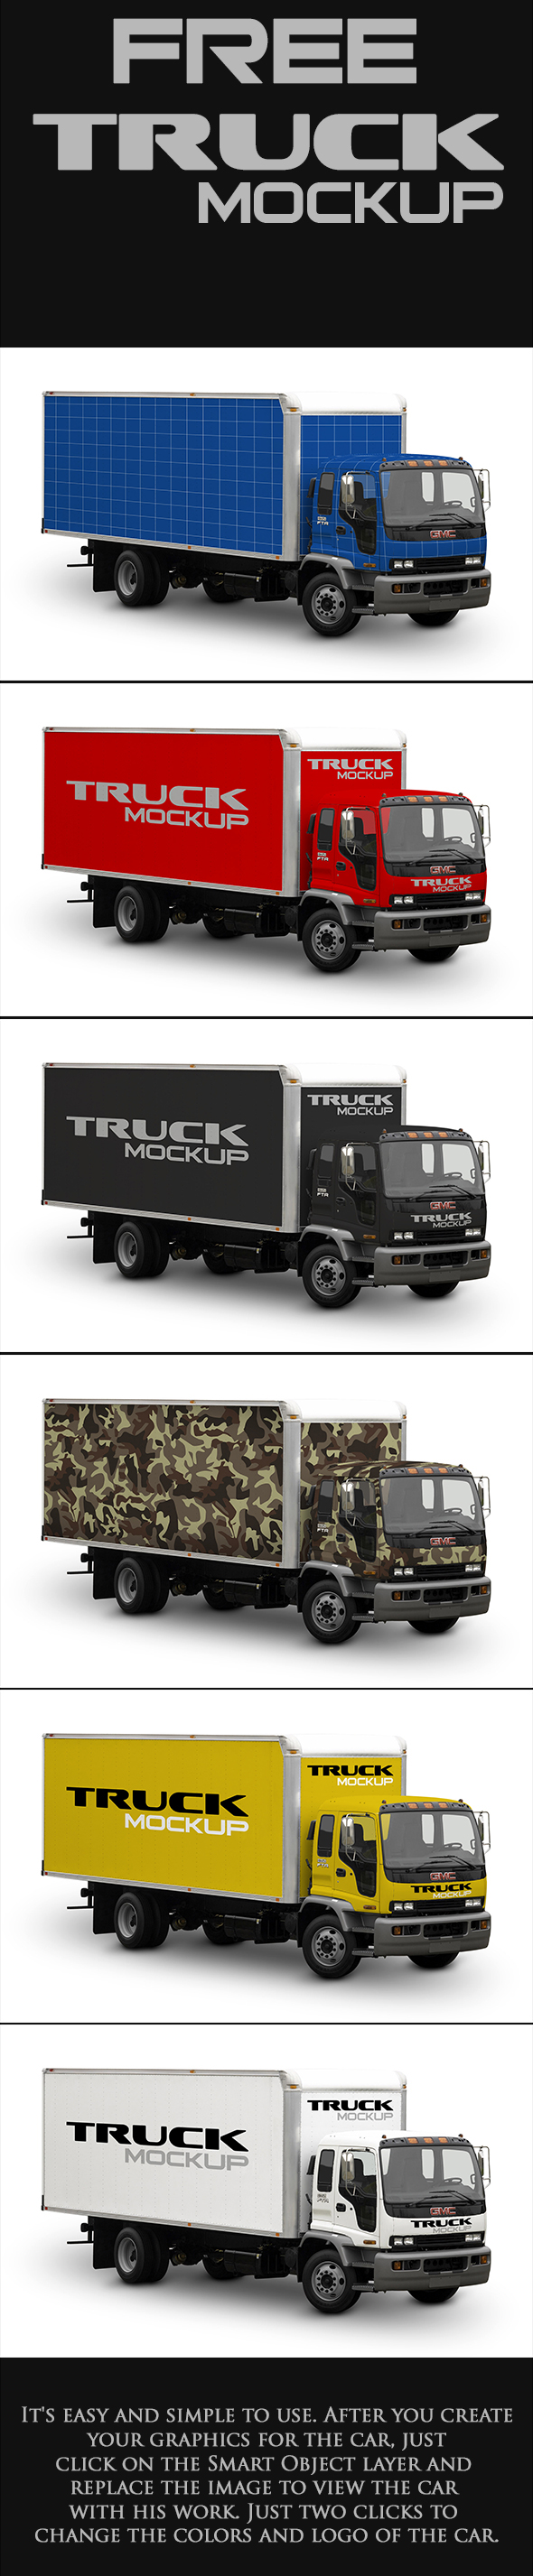 desigin marca Branding design Plotagem mock-up free design gráfico Truck